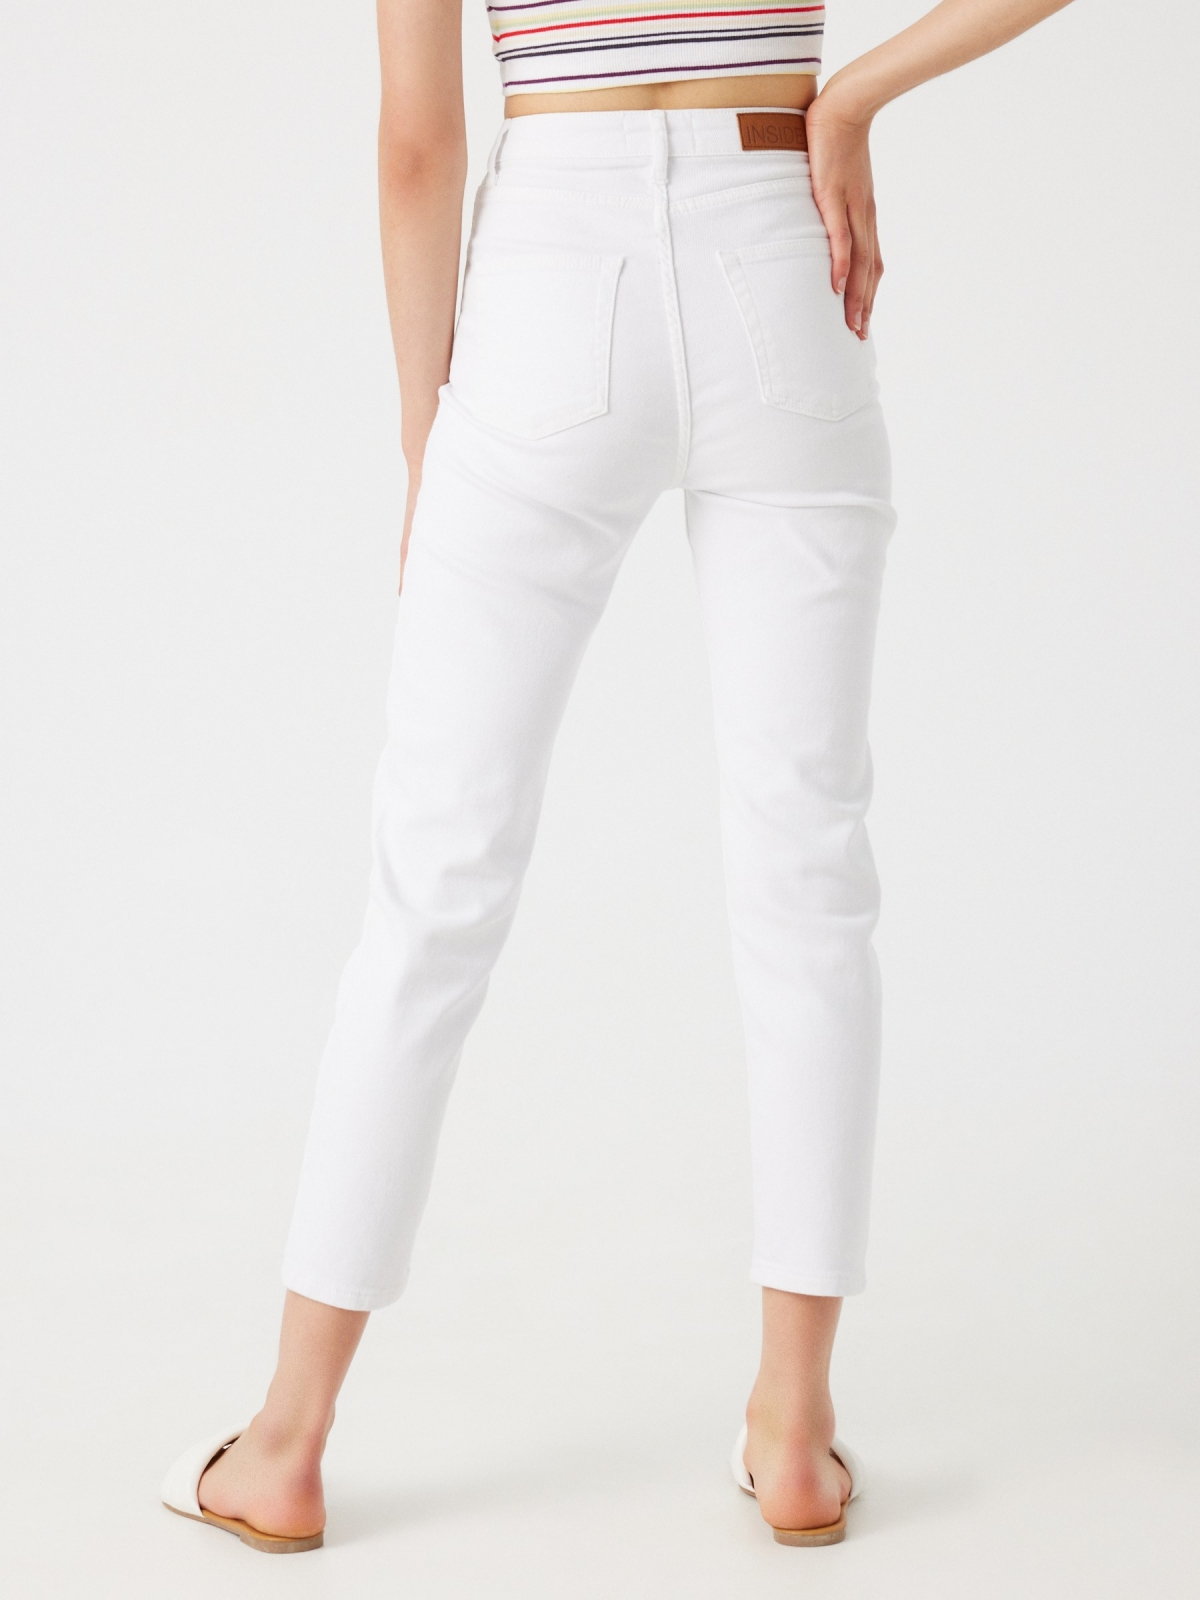 Jeans mom fit cinco bolsillos blanco vista media trasera